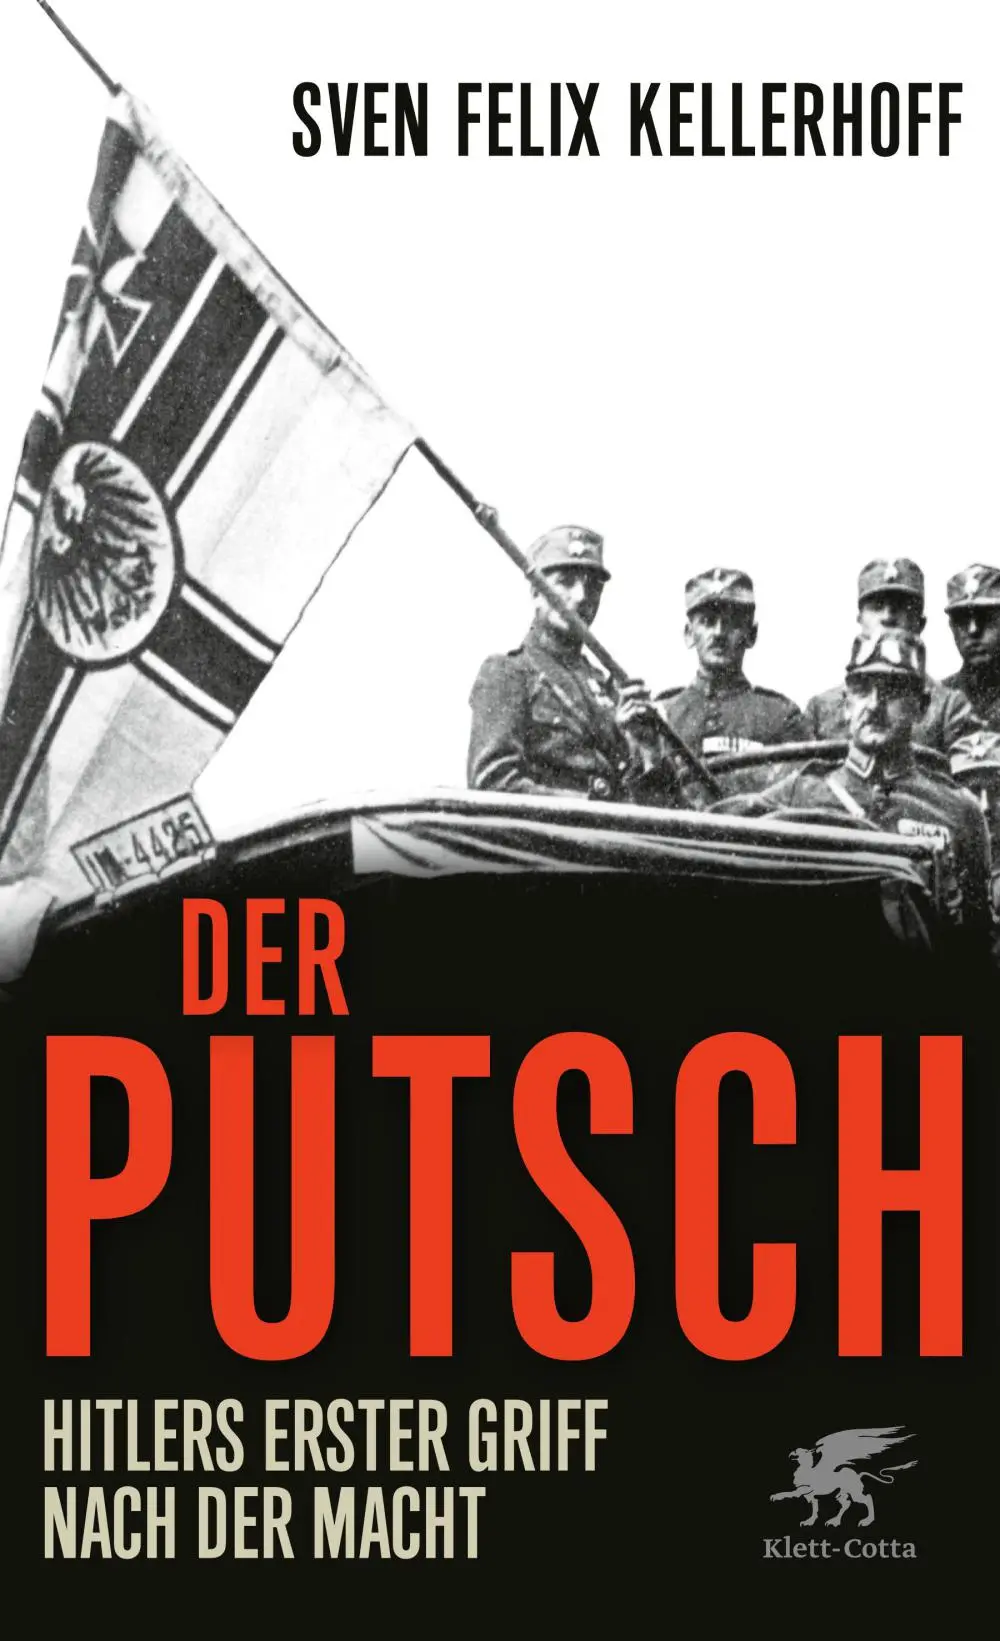 Buchcover: Sven Felix Kellerhoff - Der Putsch.